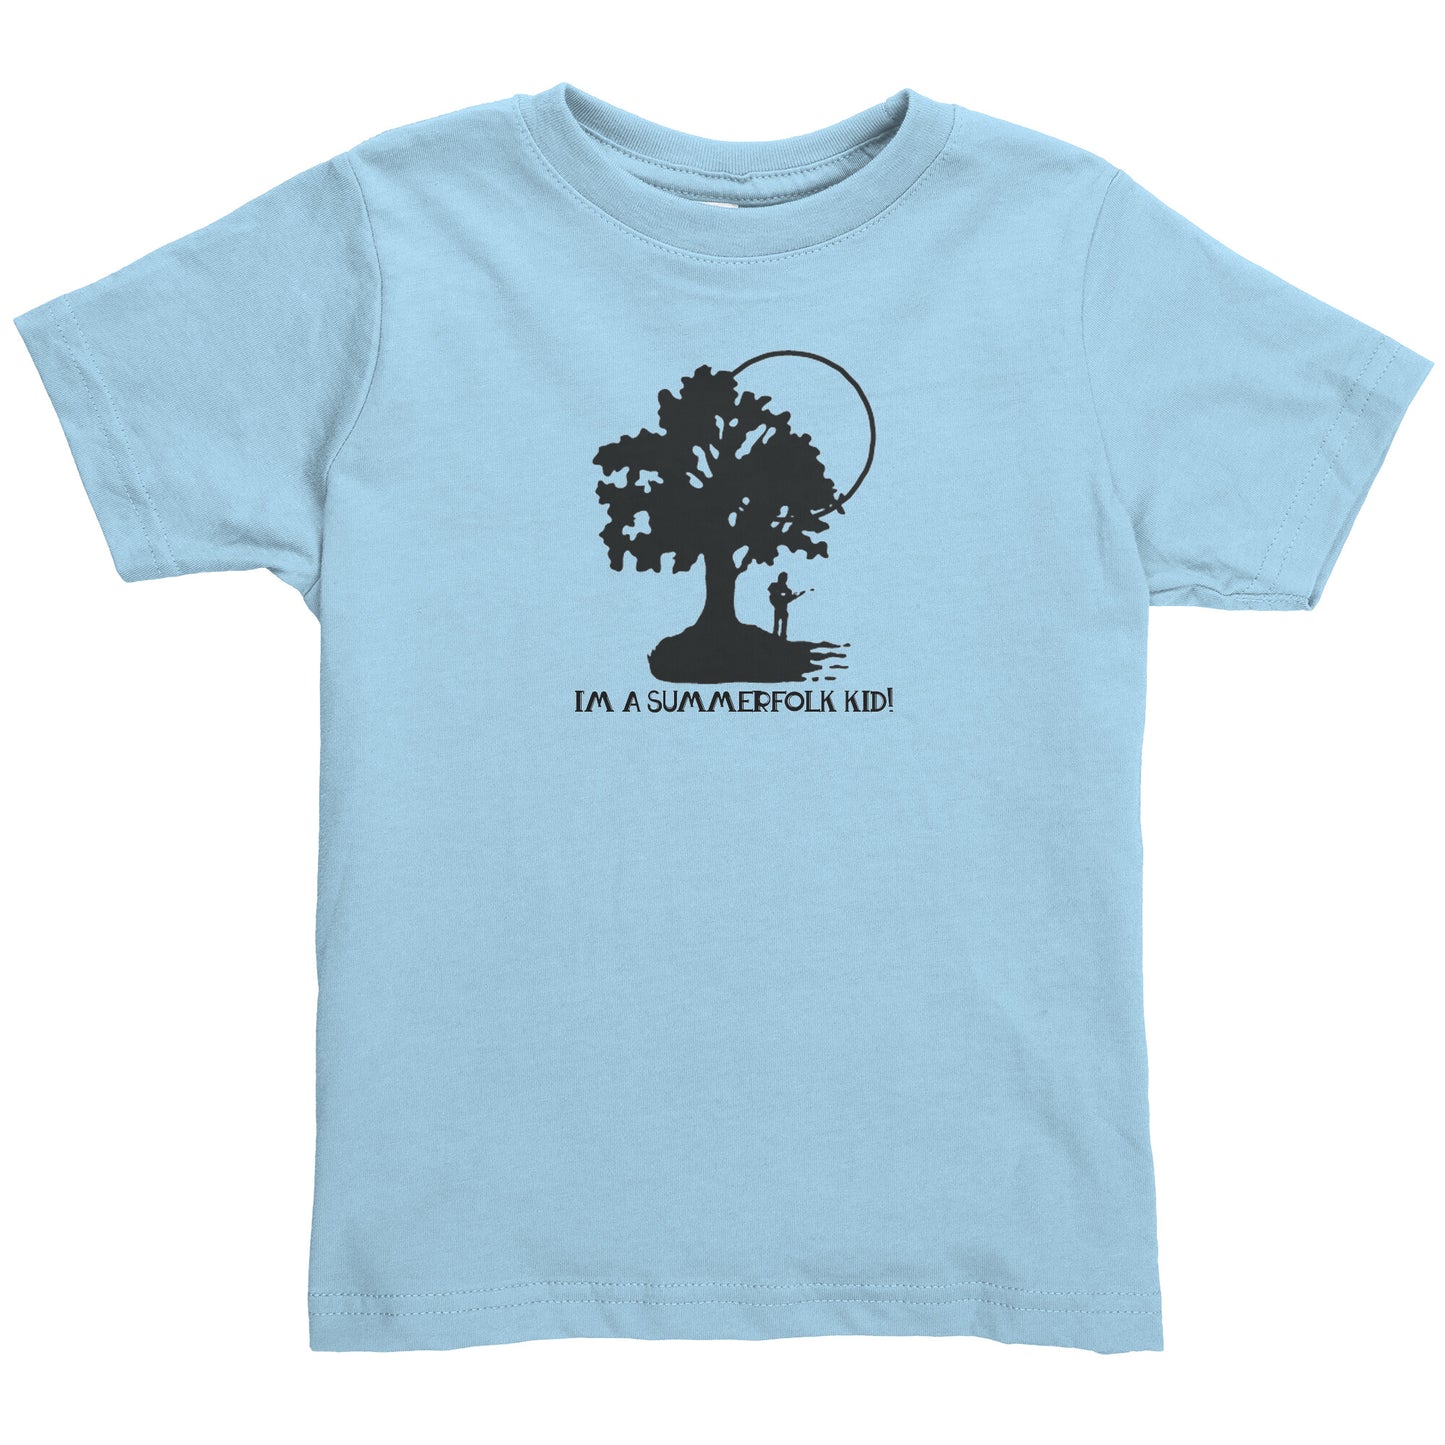 Summerfolk Kid Toddler Shirt (online only)